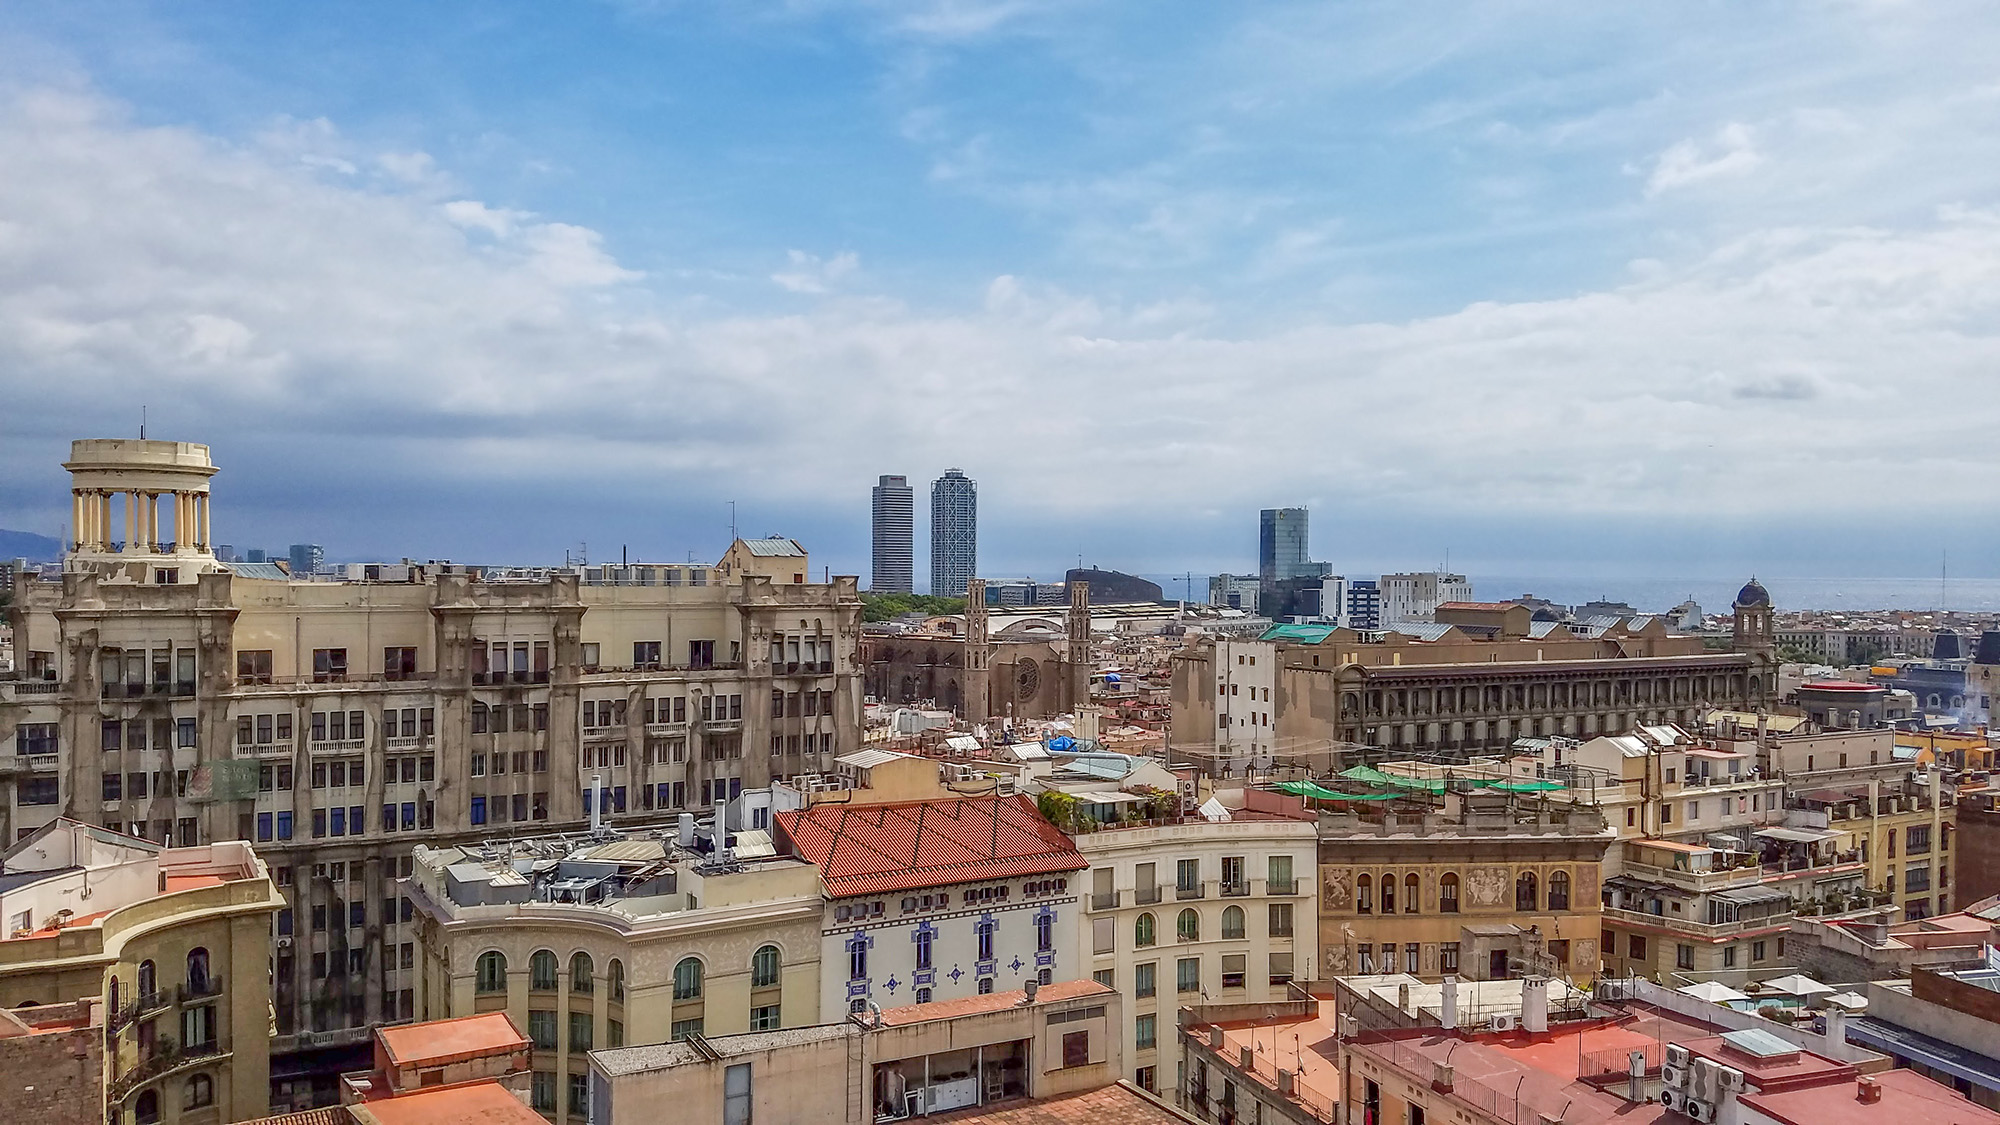 6. Barcelona city view - Photo by Shelley Treadaway